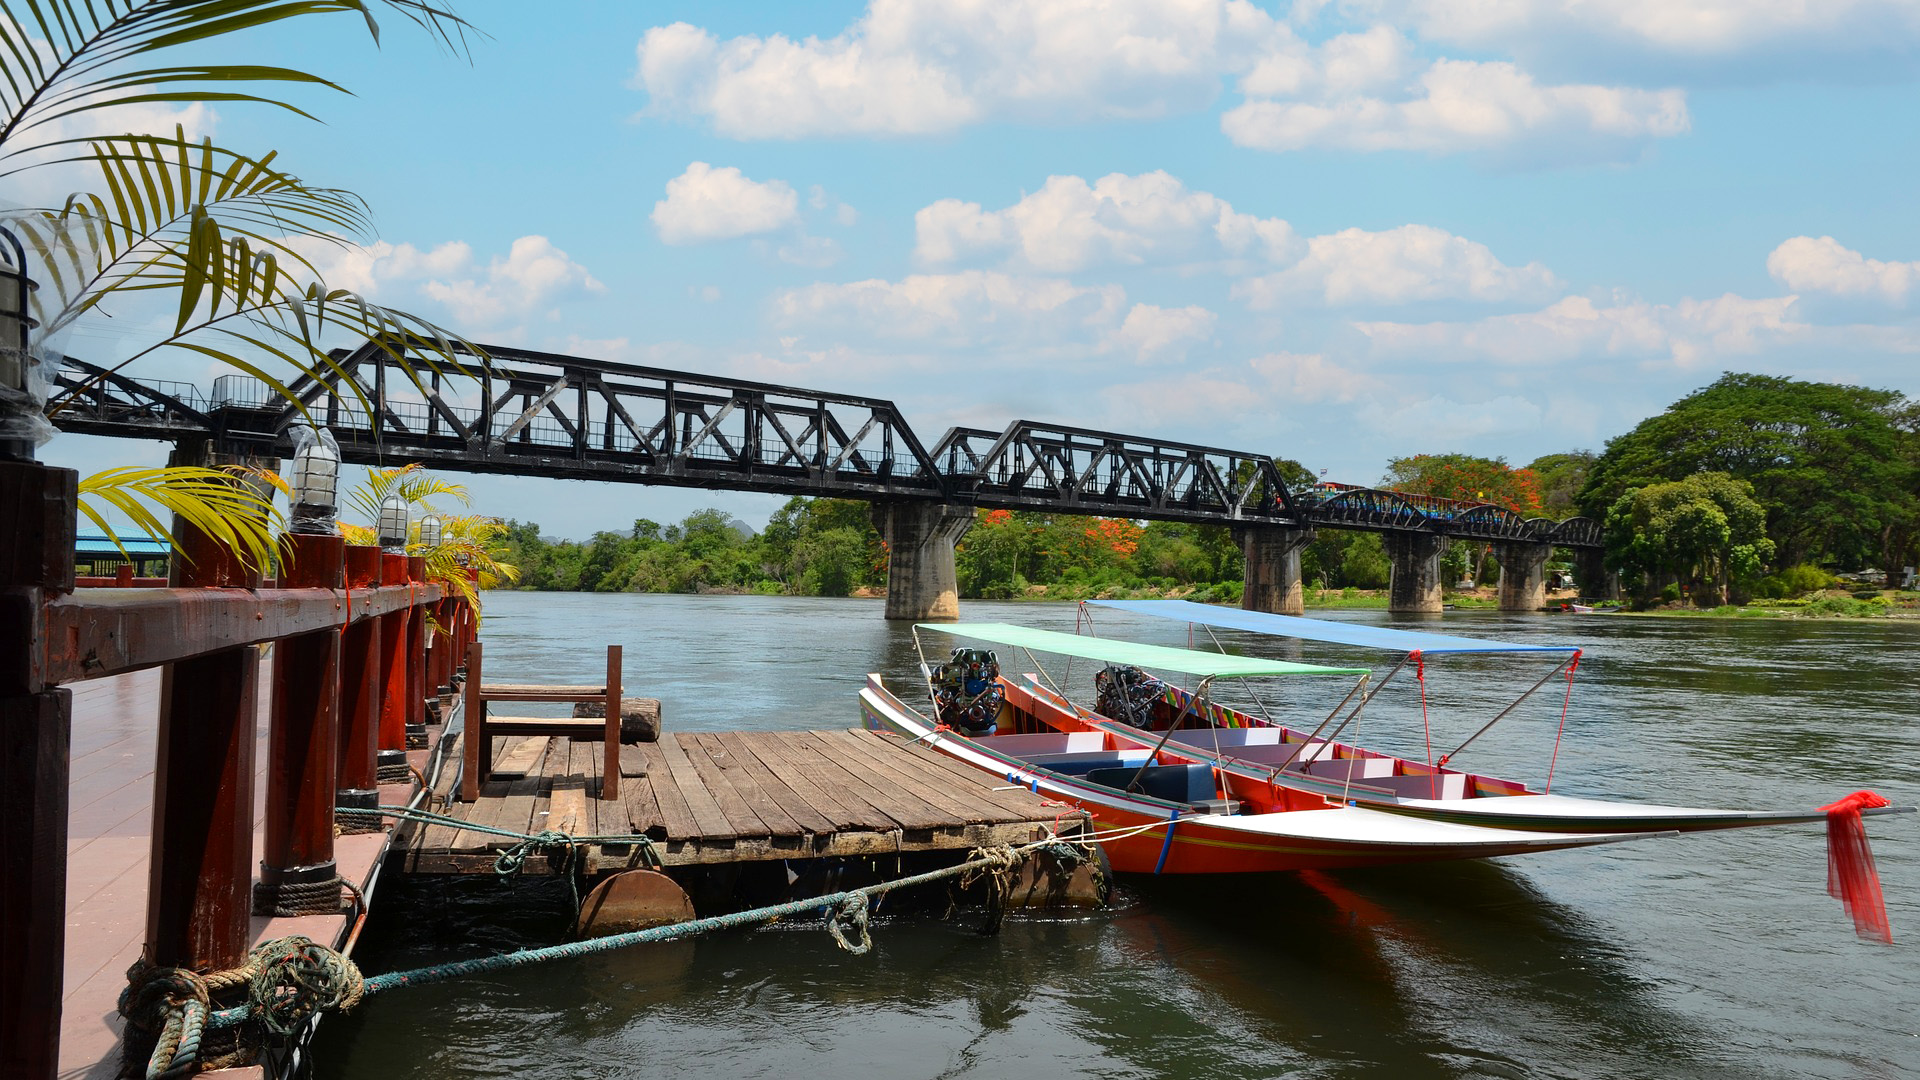 Bridge Over the River Kwai Day Tour